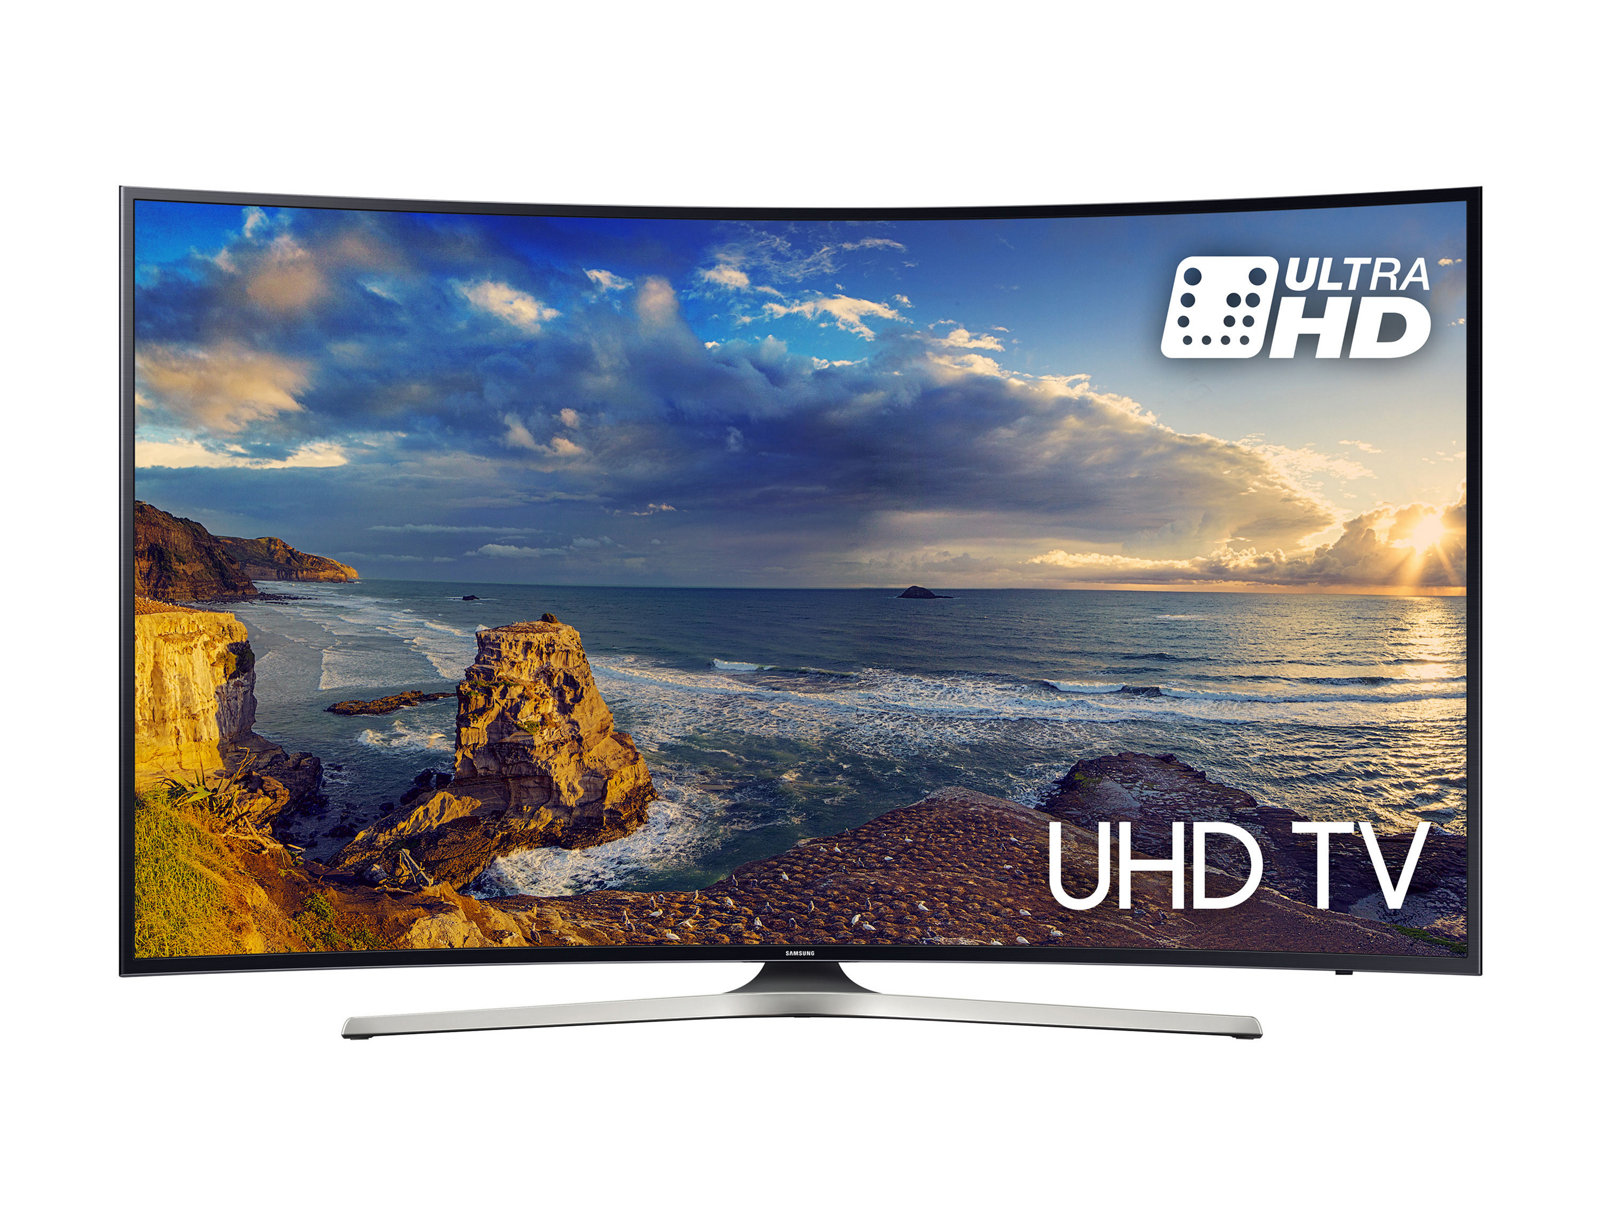 Samsung UE49MU6220 TV